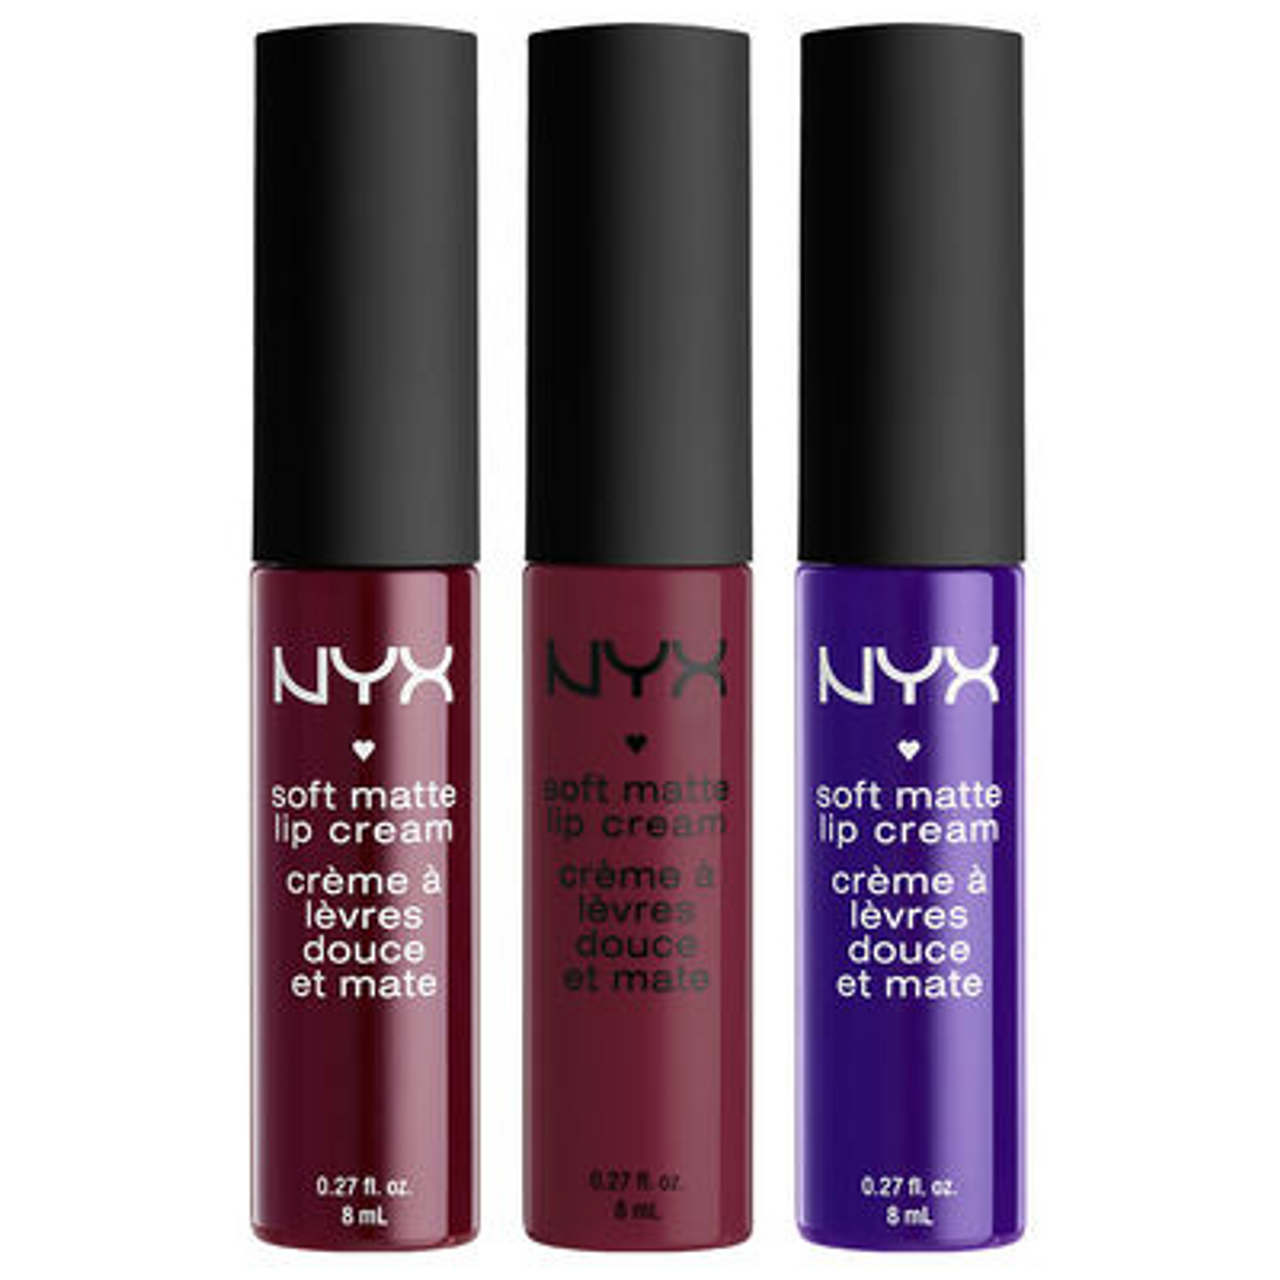 Shop NYX Soft Matte Lip Cream Set #6 at LadyMoss.com